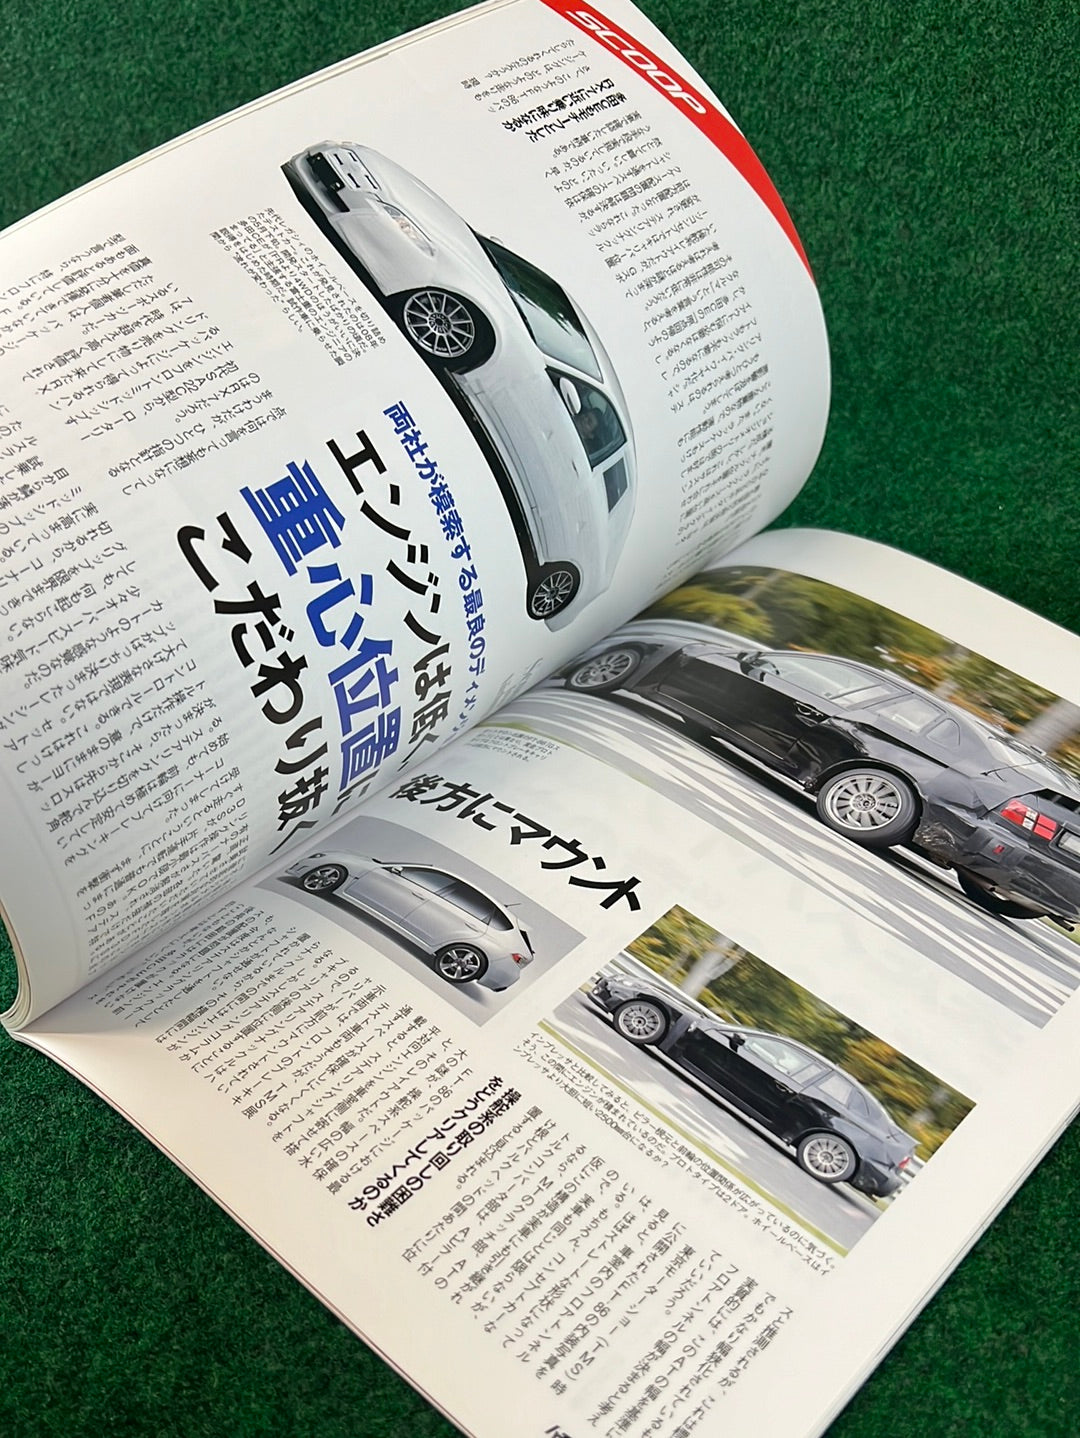 Hachiroku! - Toyota Corolla AE86 “There is Soul Sports” Magazine